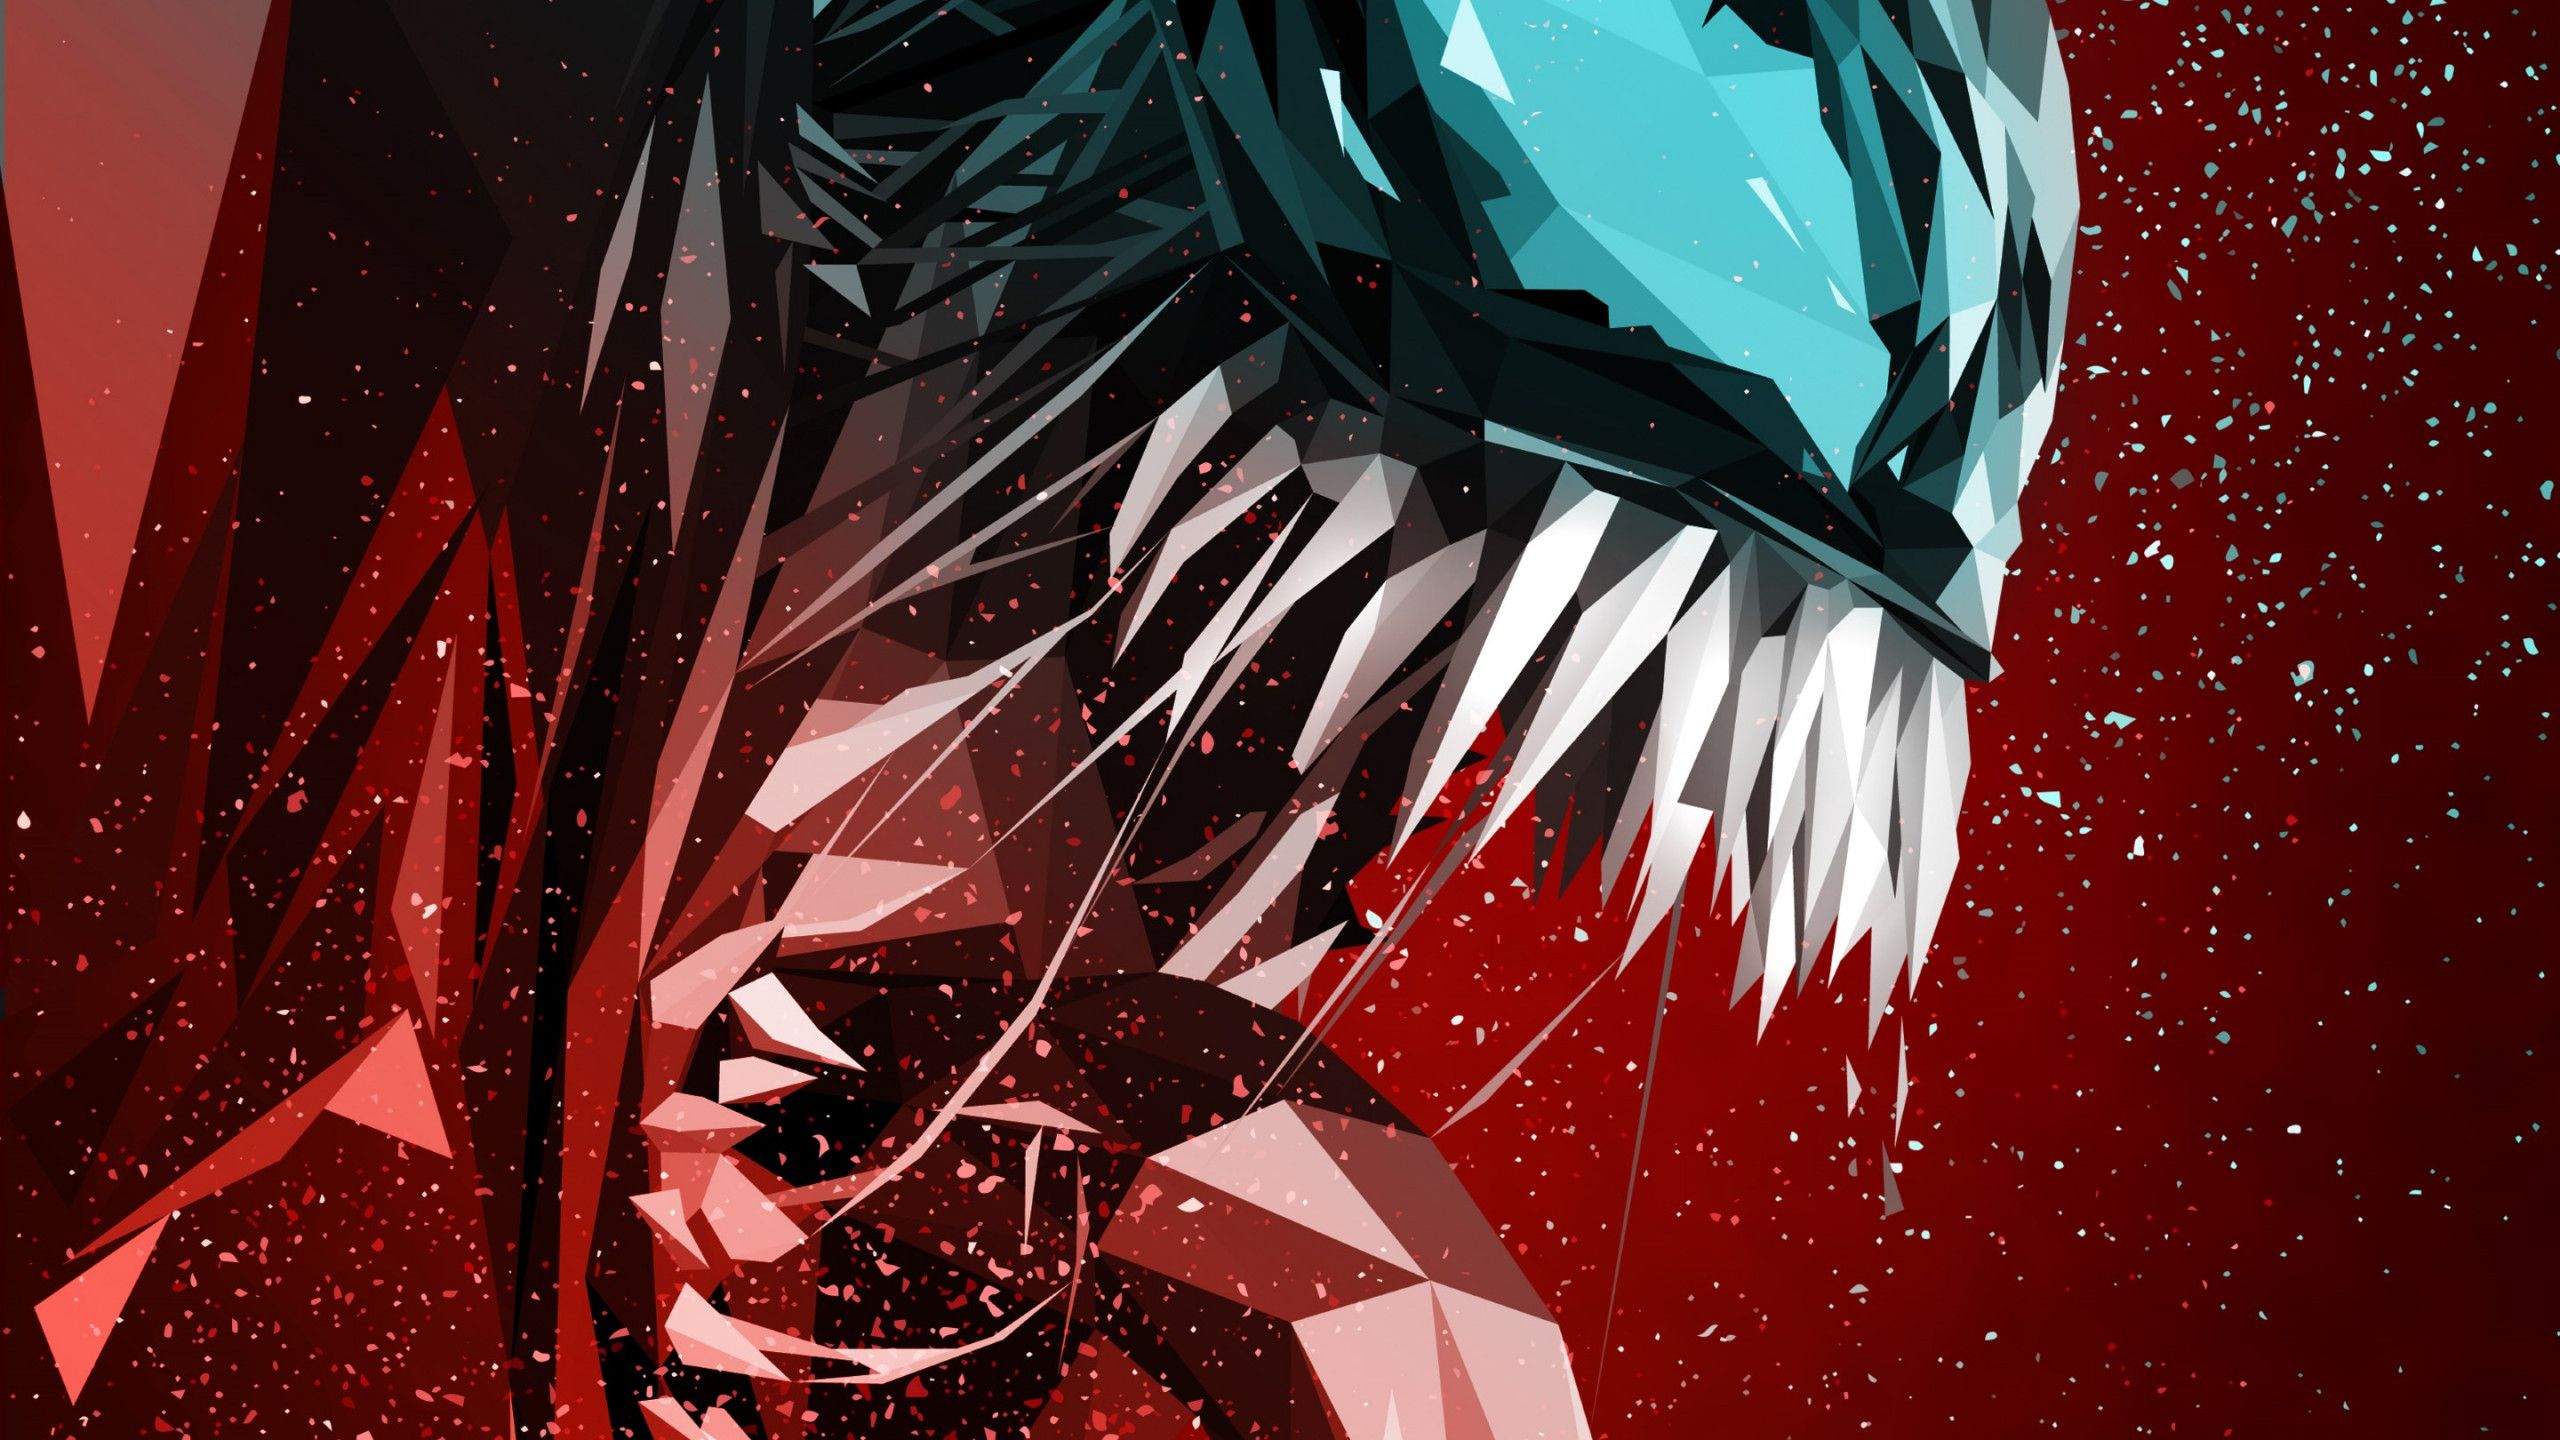 Download wallpaper: Venom digital art poster 2560x1440